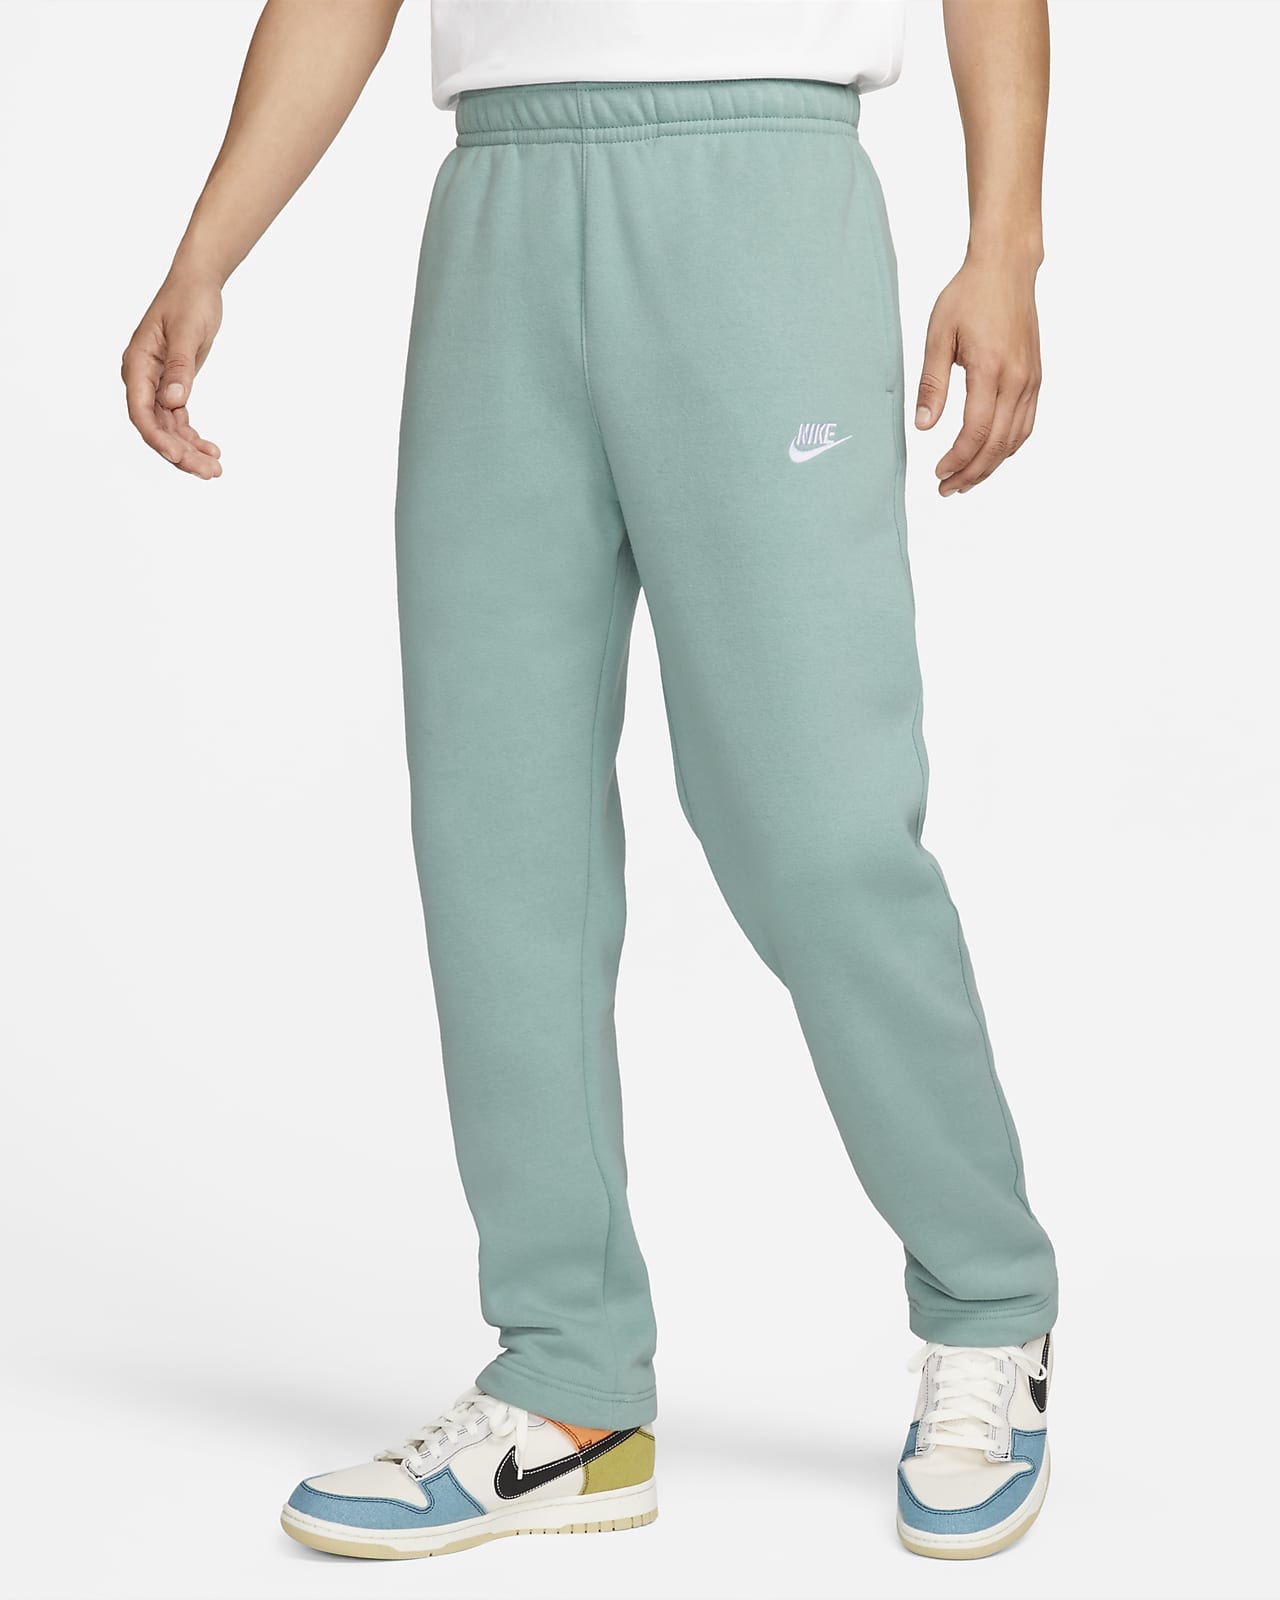 Meget rart godt atomar Nyttig Nike Sportswear Club Fleece-bukser til mænd. Nike DK